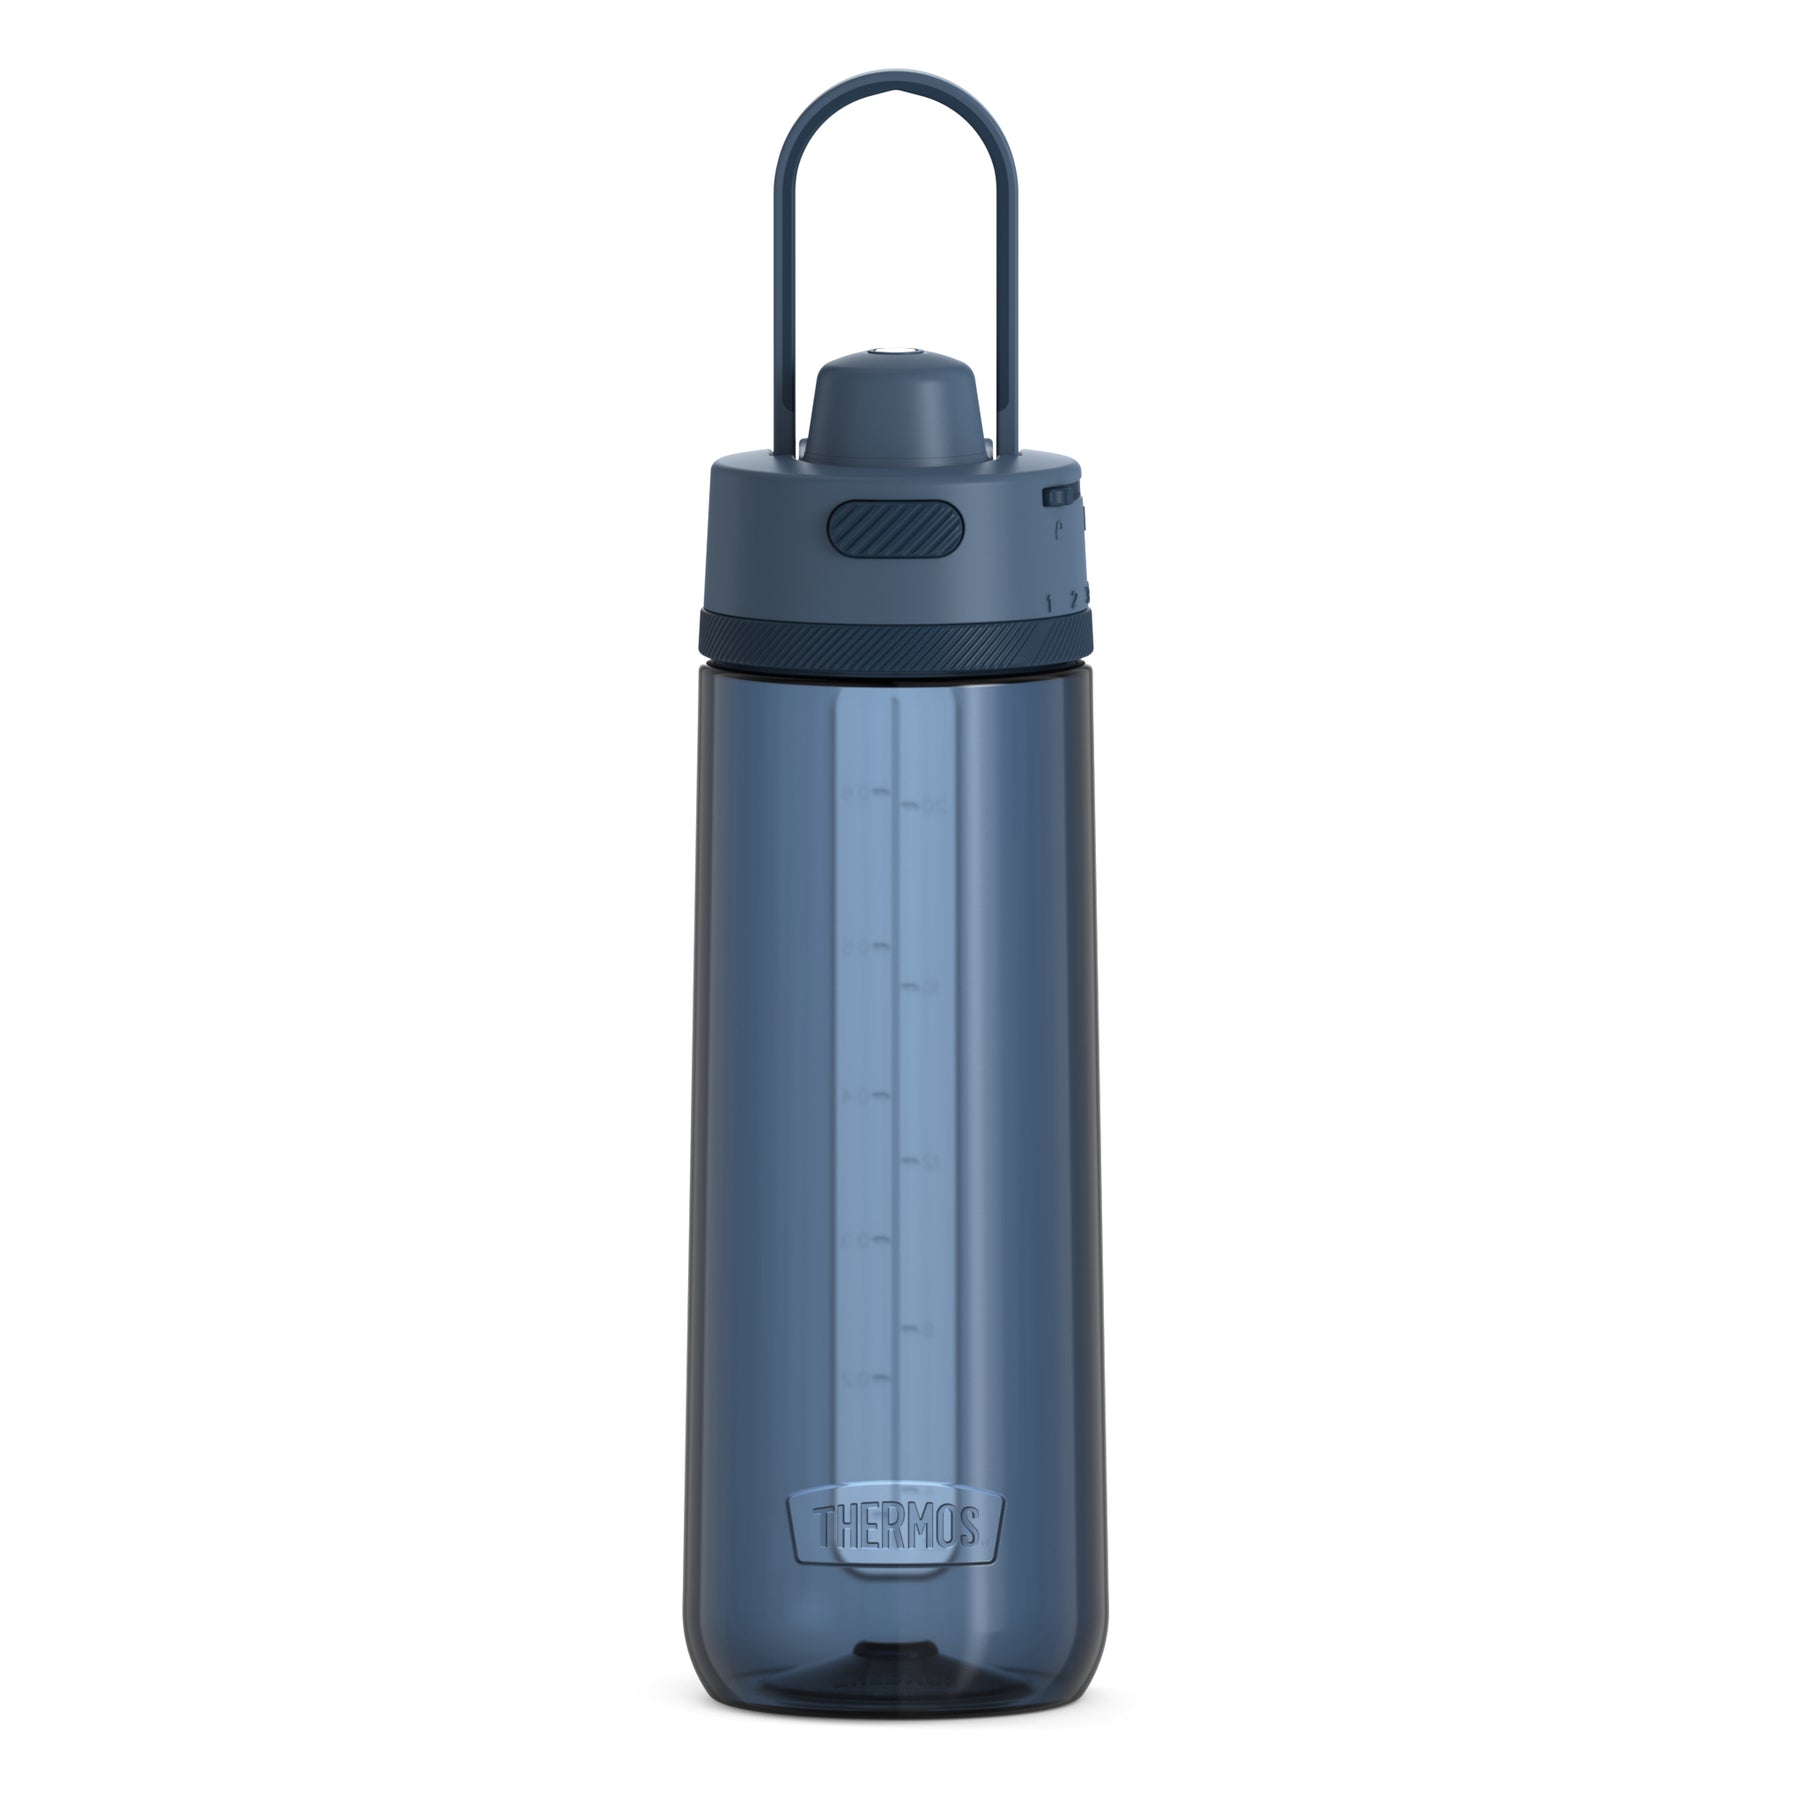 24 oz Tritan Plastic Water Bottle